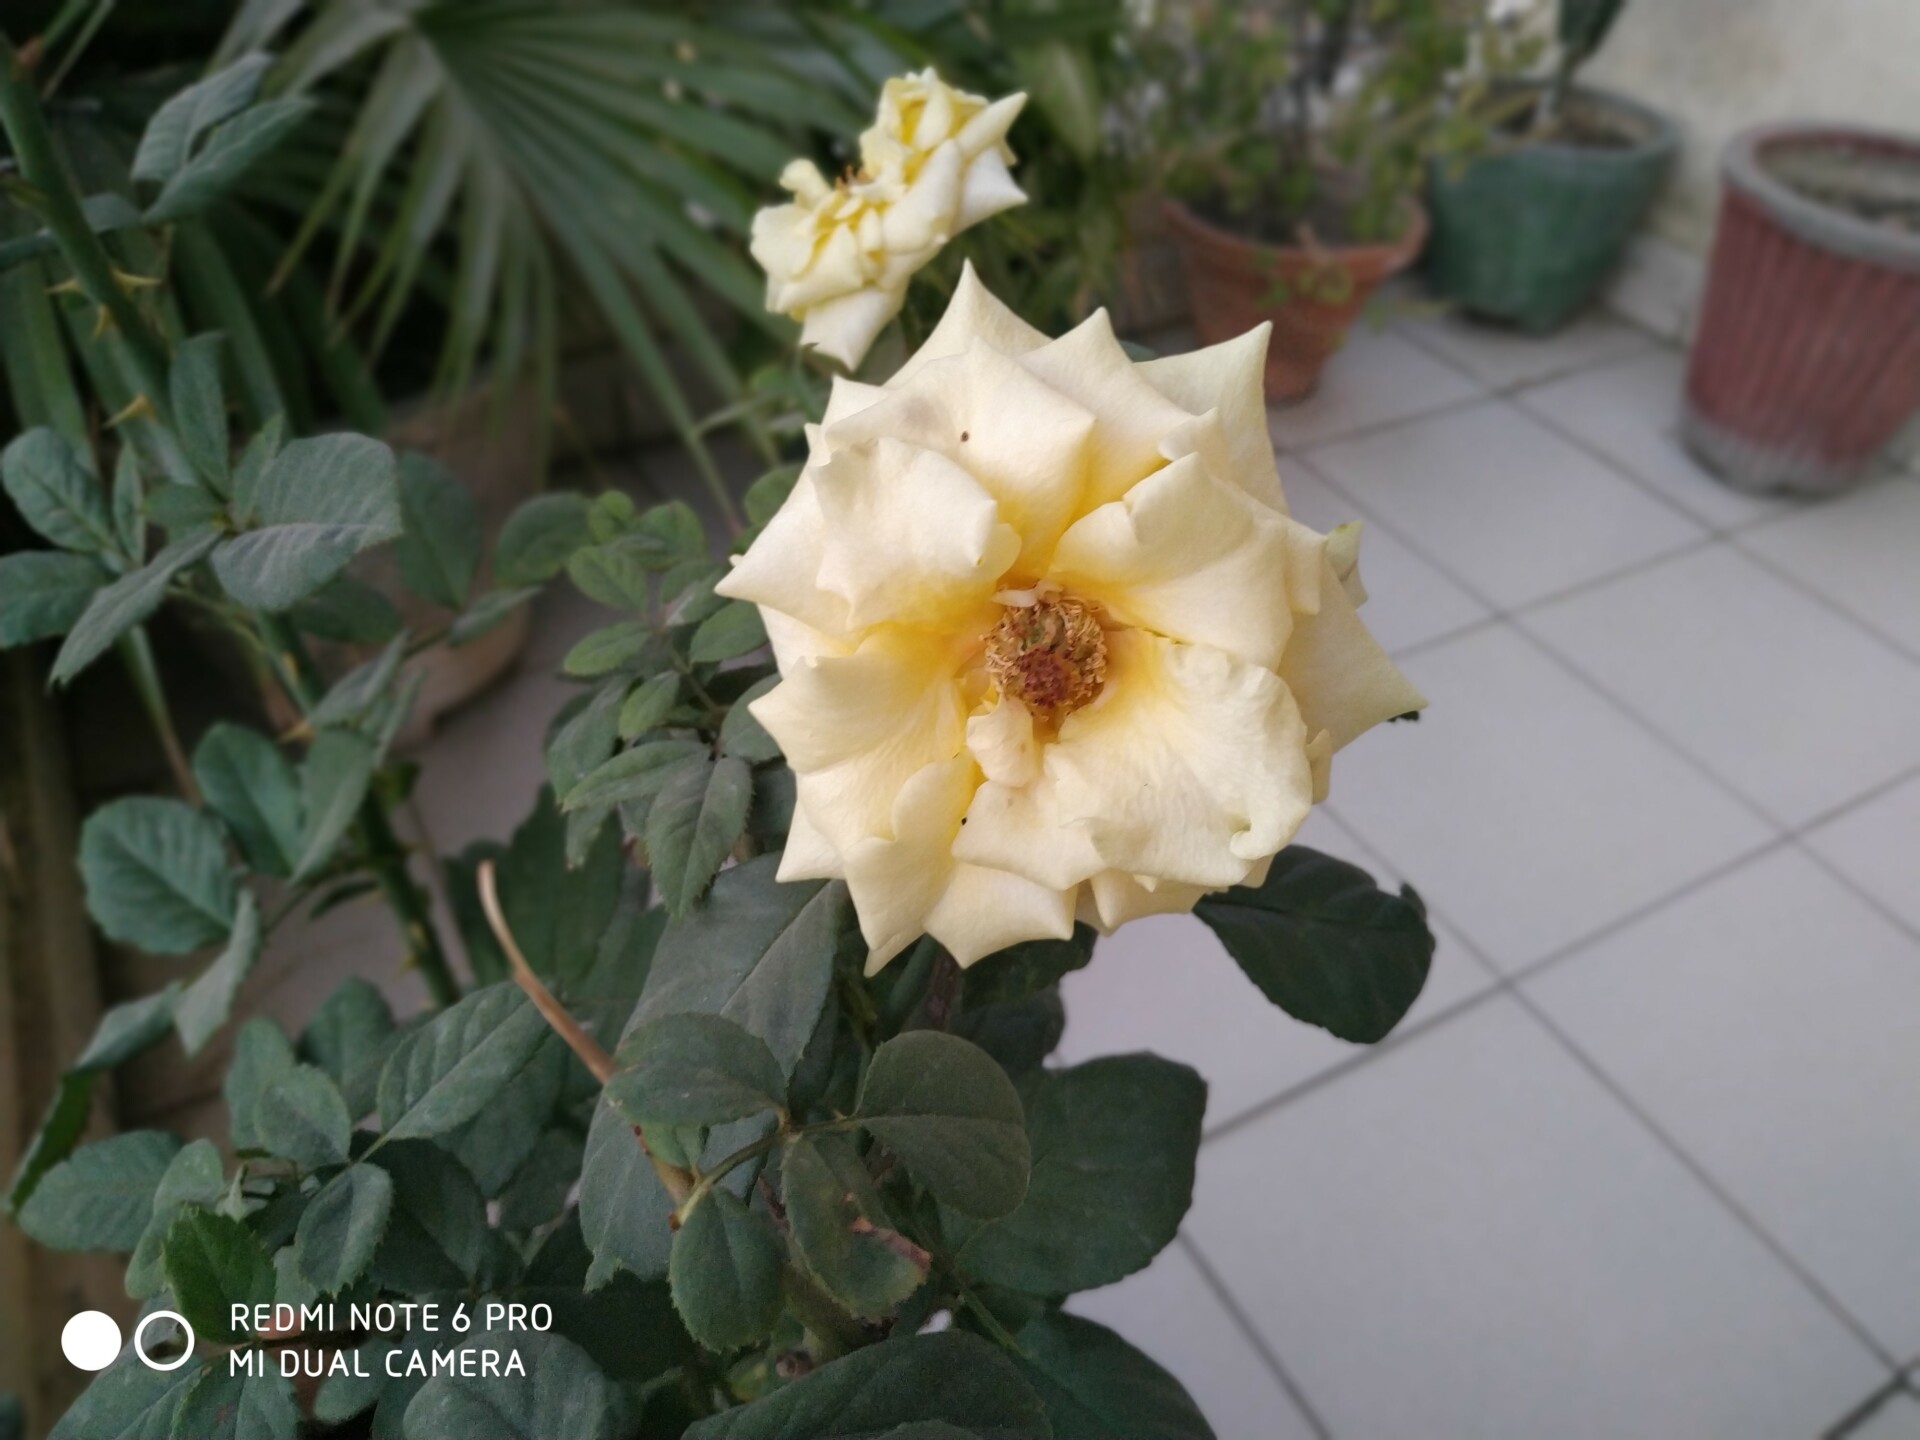 Redmi Note 6 Pro flower sample shot